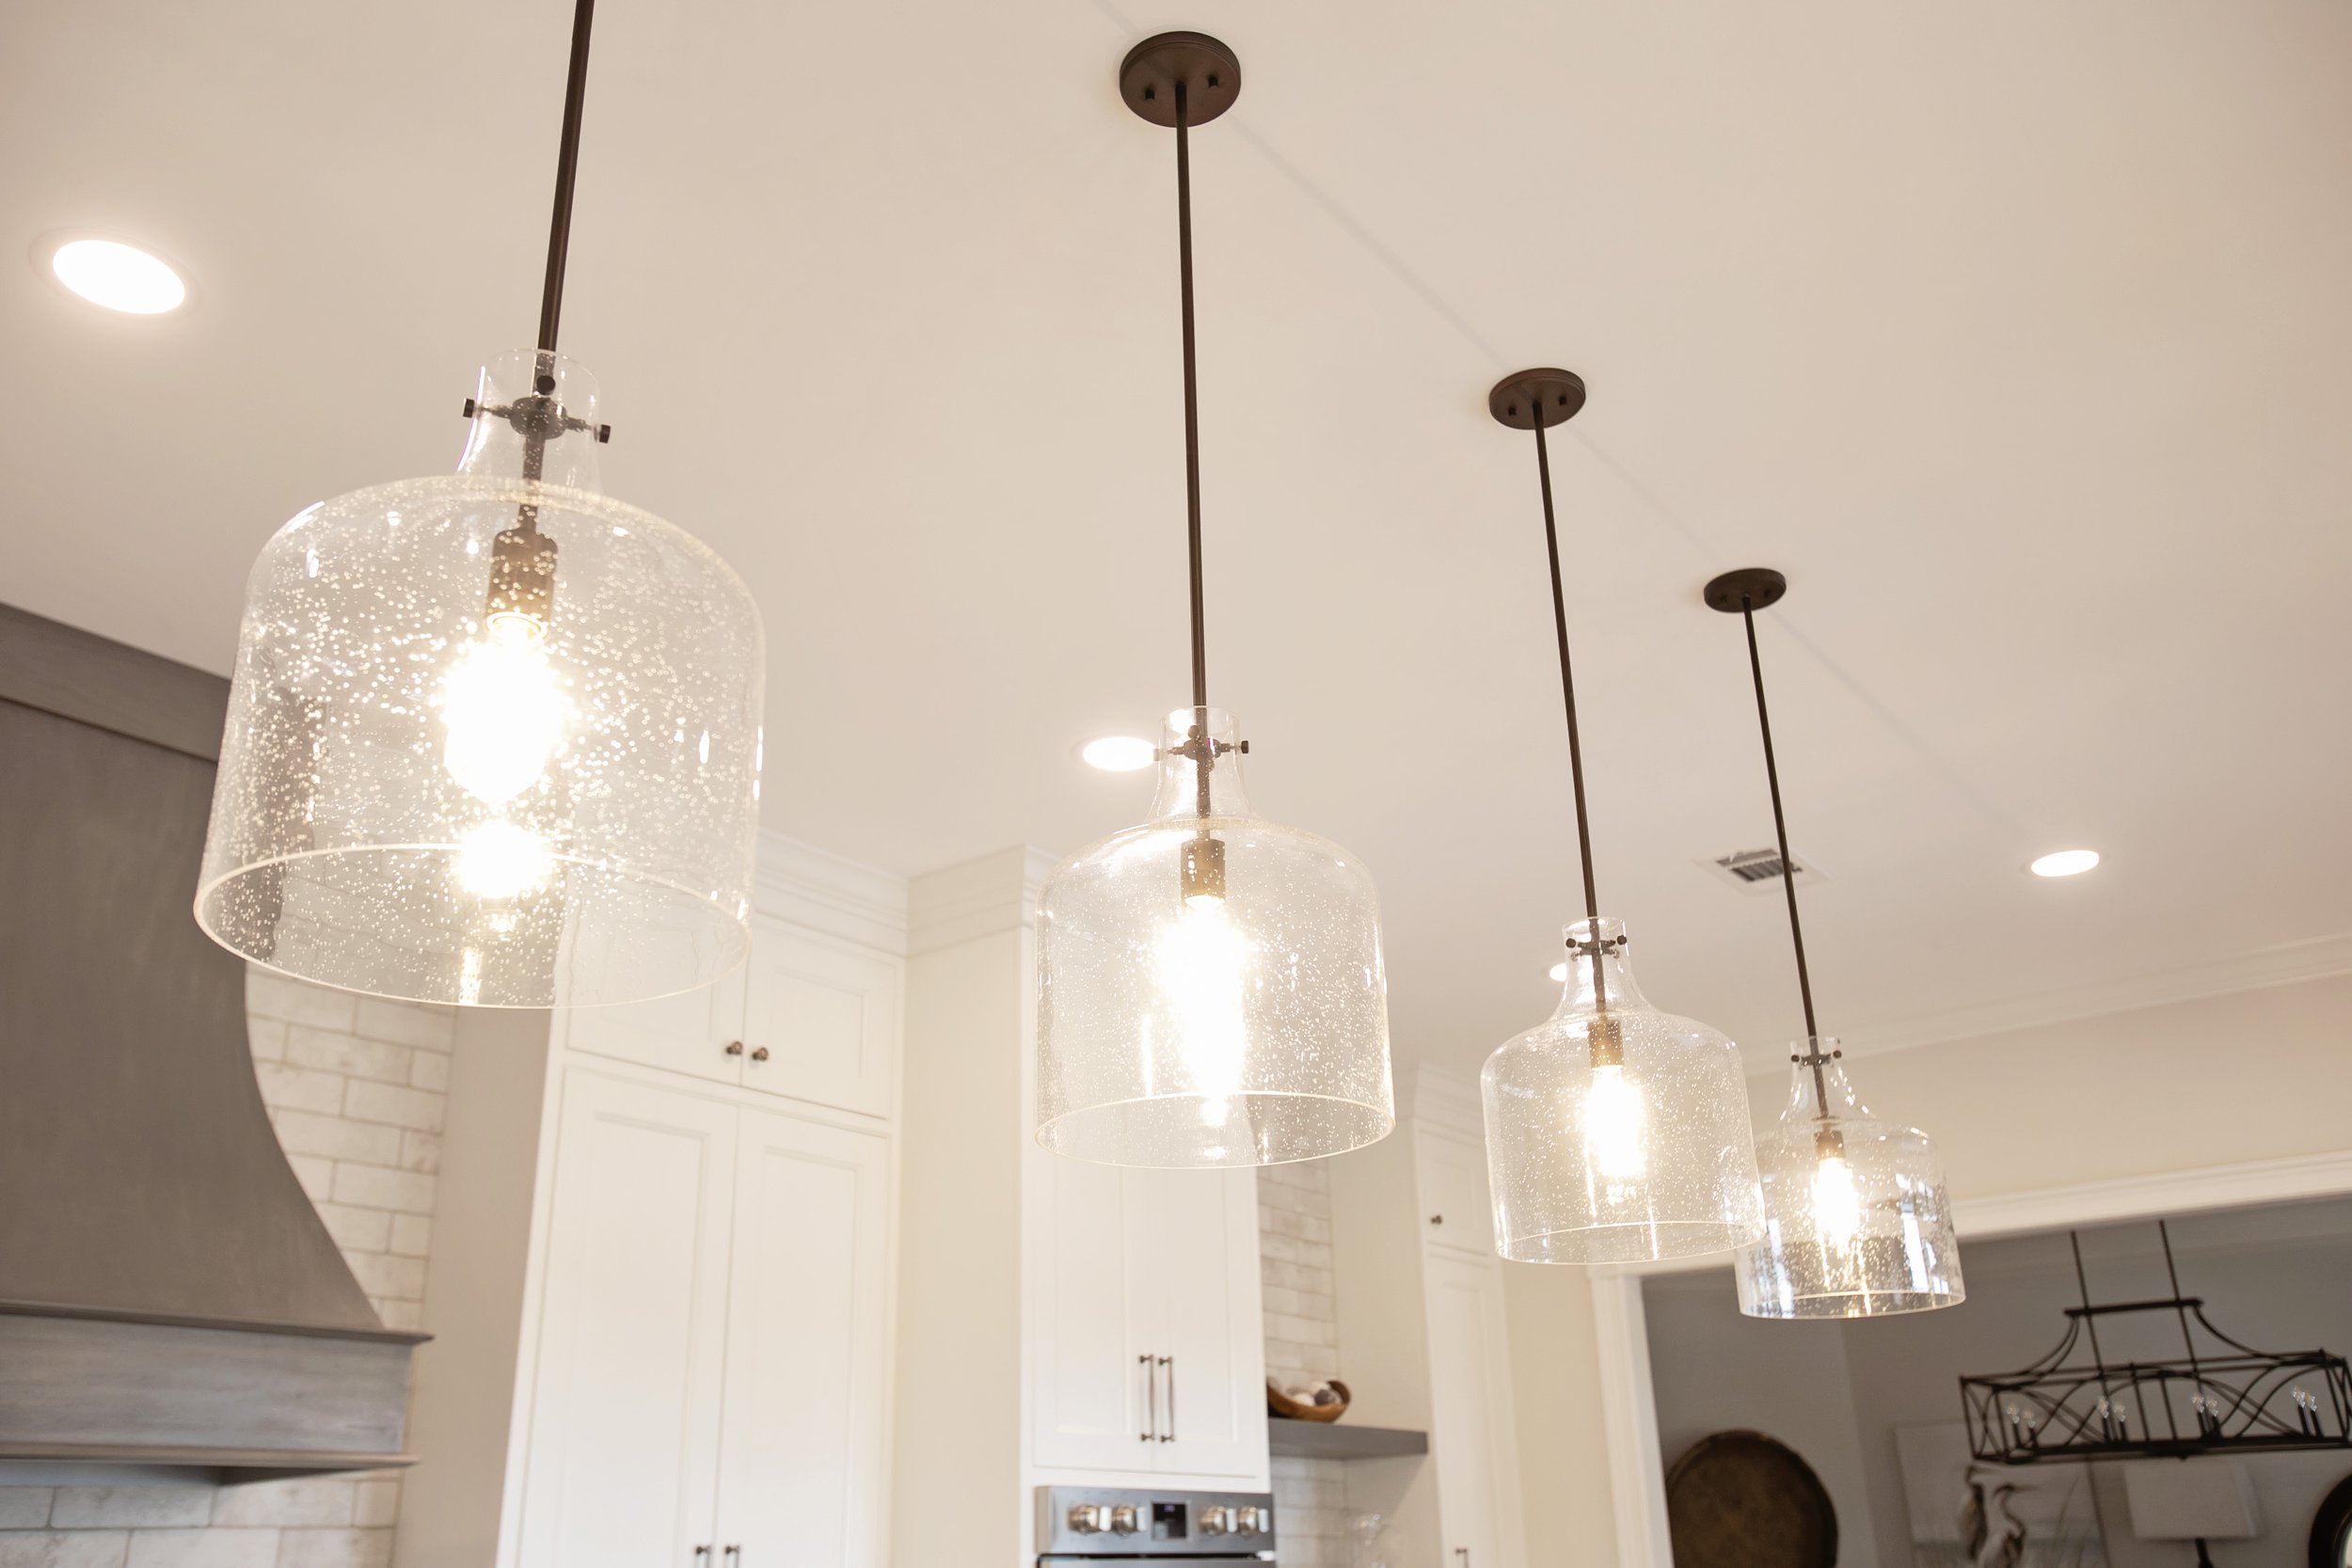 Four pendant lights over large kitchen island_Pool Brothers Lighting.jpg